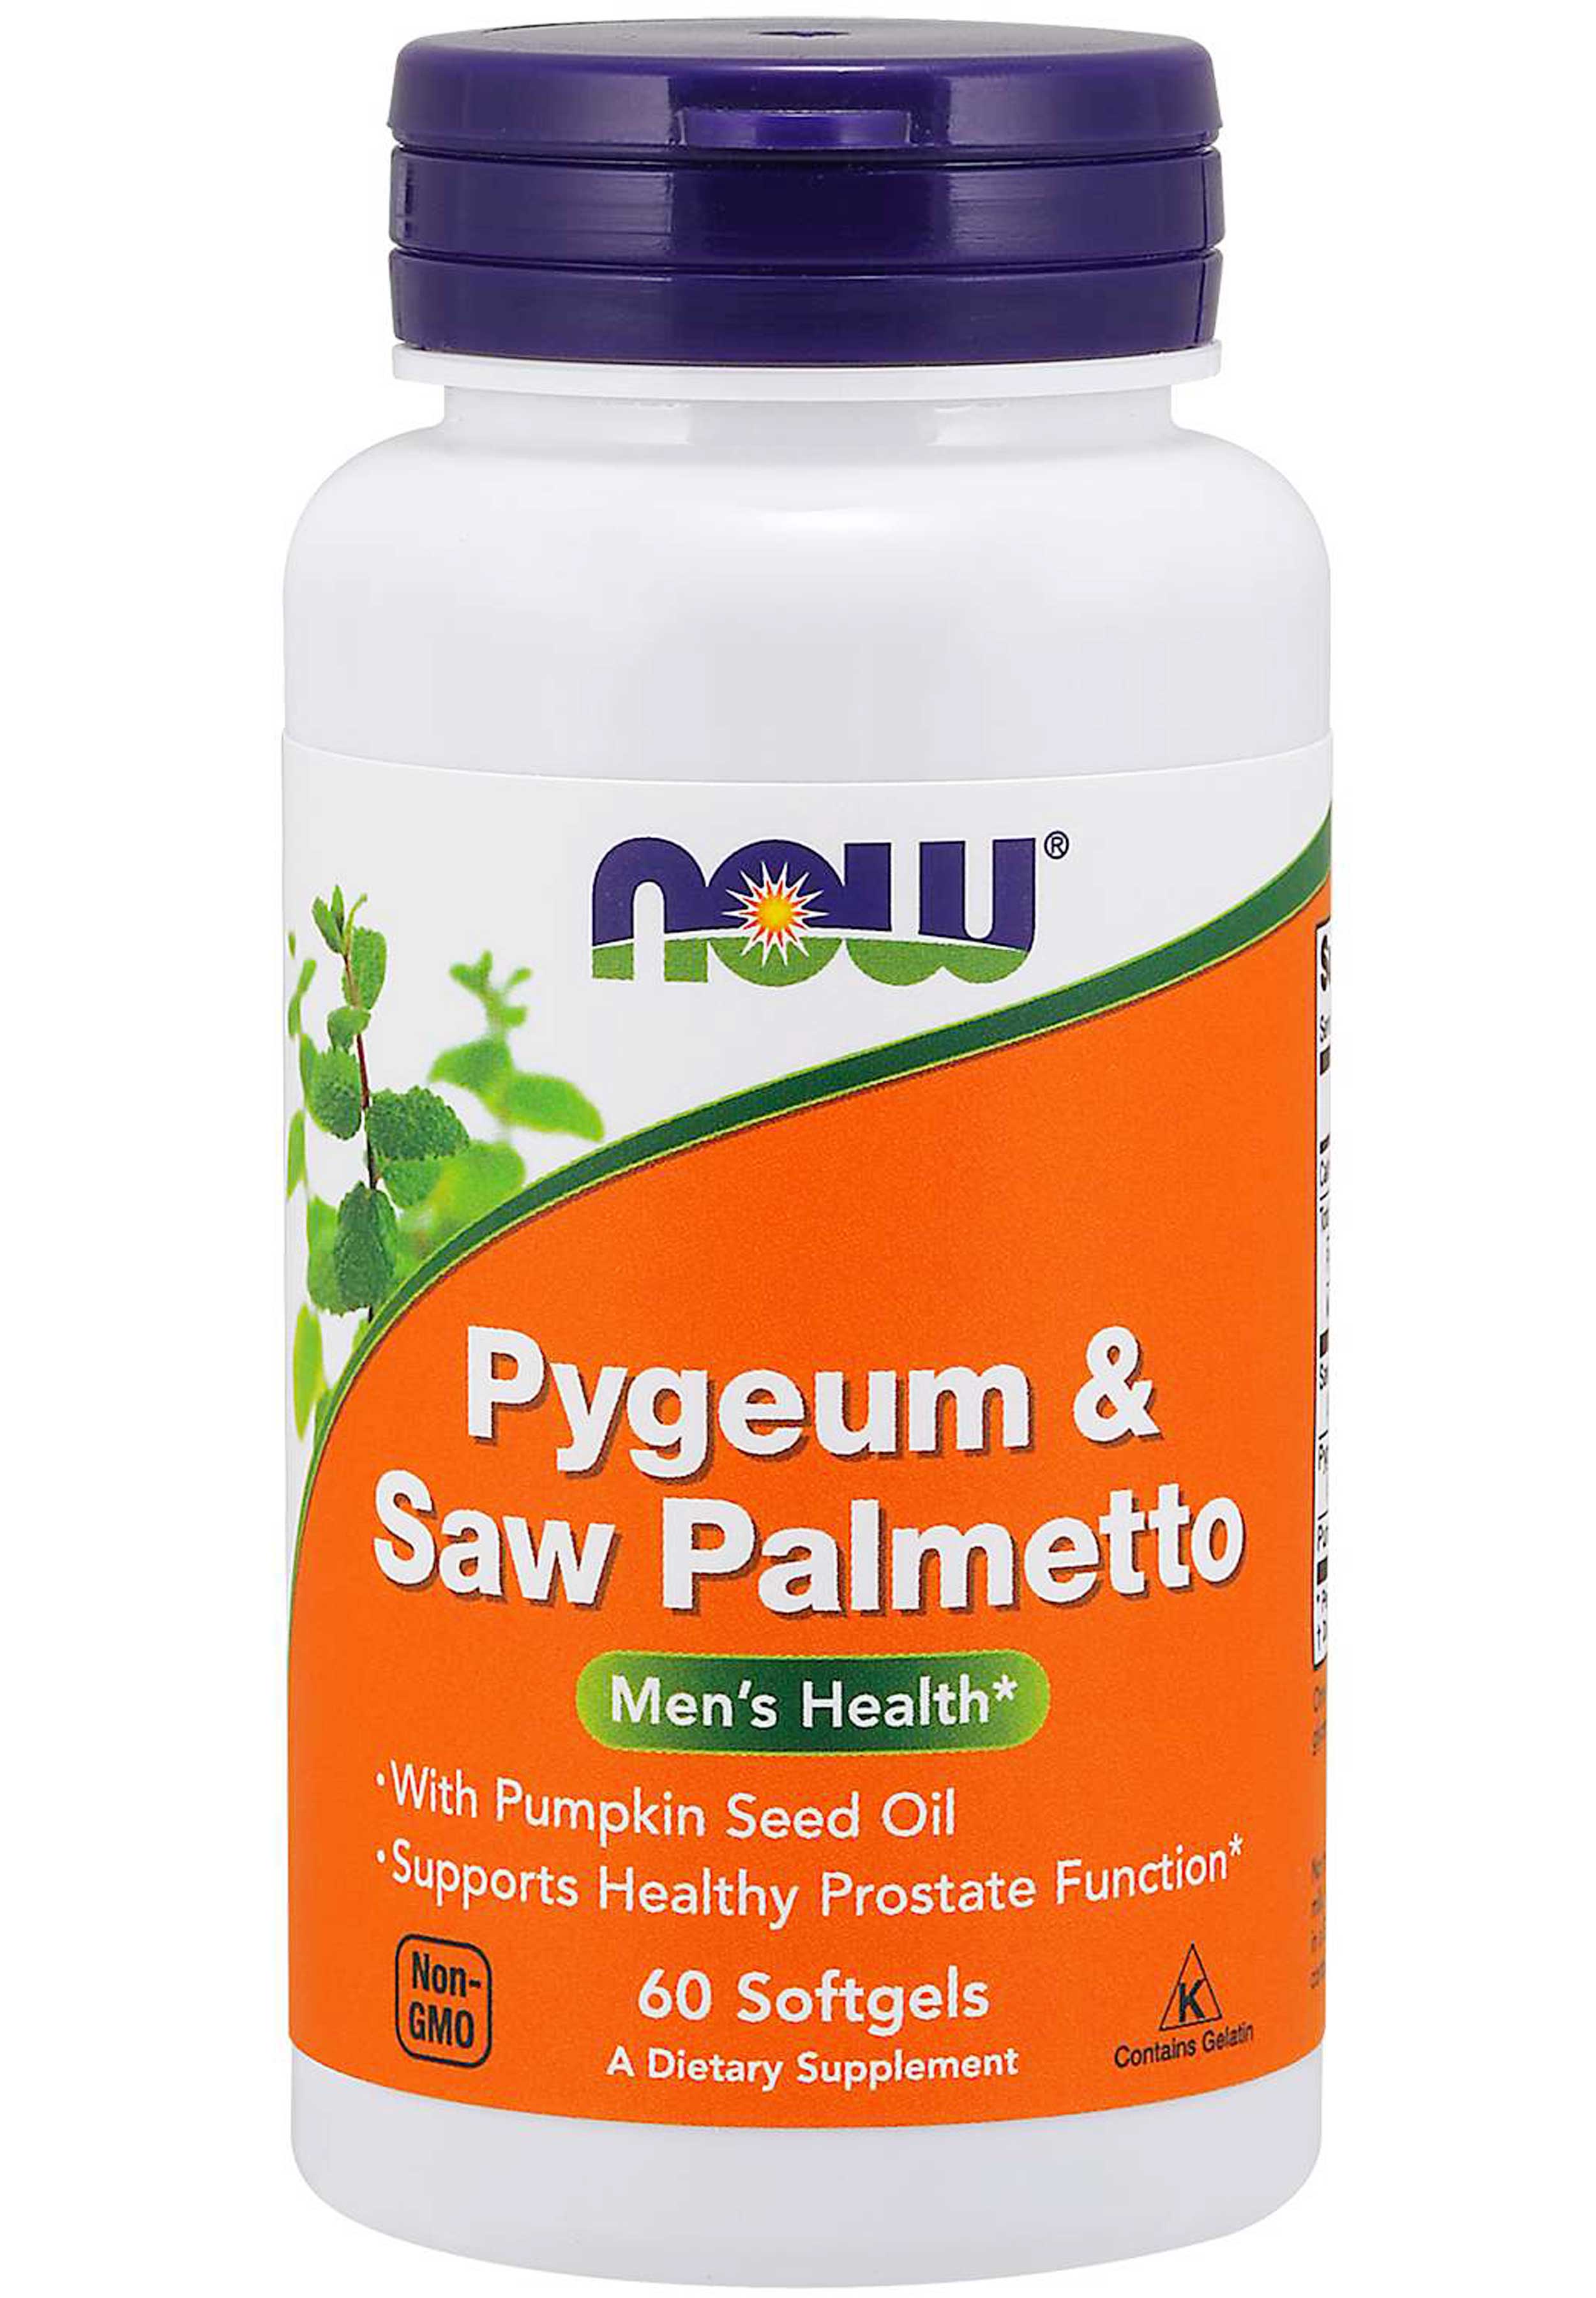 NOW Pygeum & Saw Palmetto